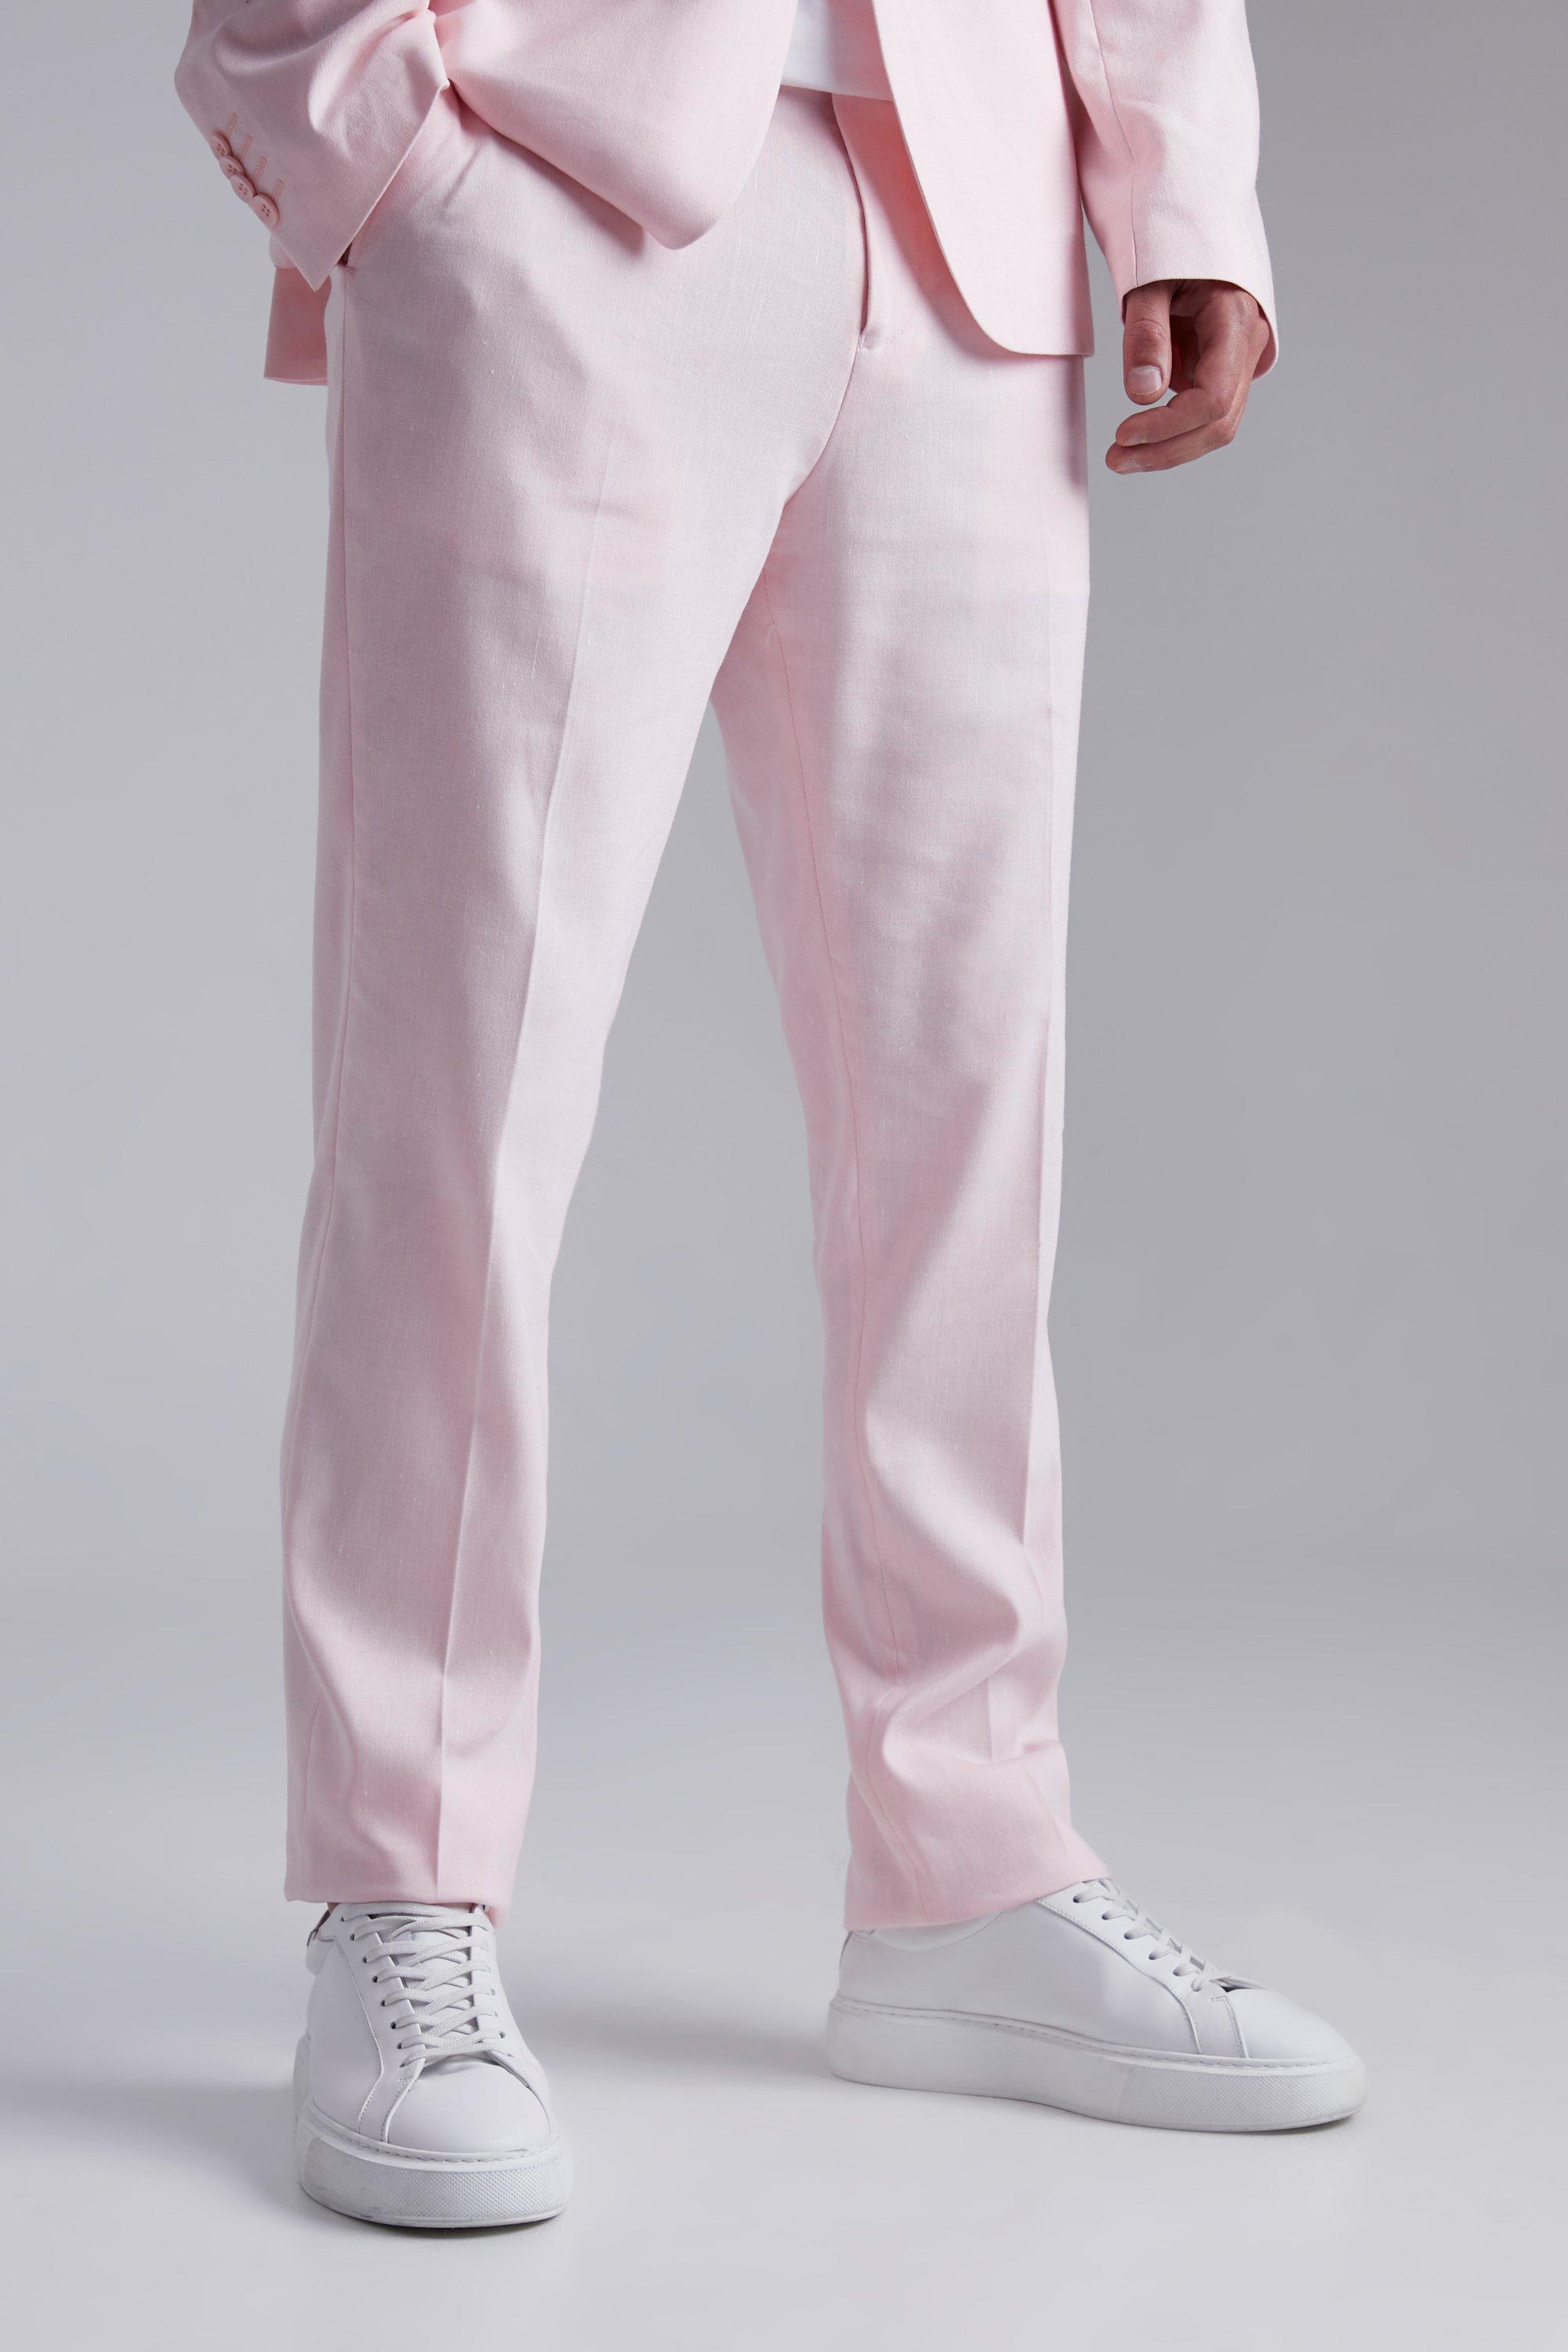 grande taille - pantalon de costume slim en lin homme - rose - 40, rose